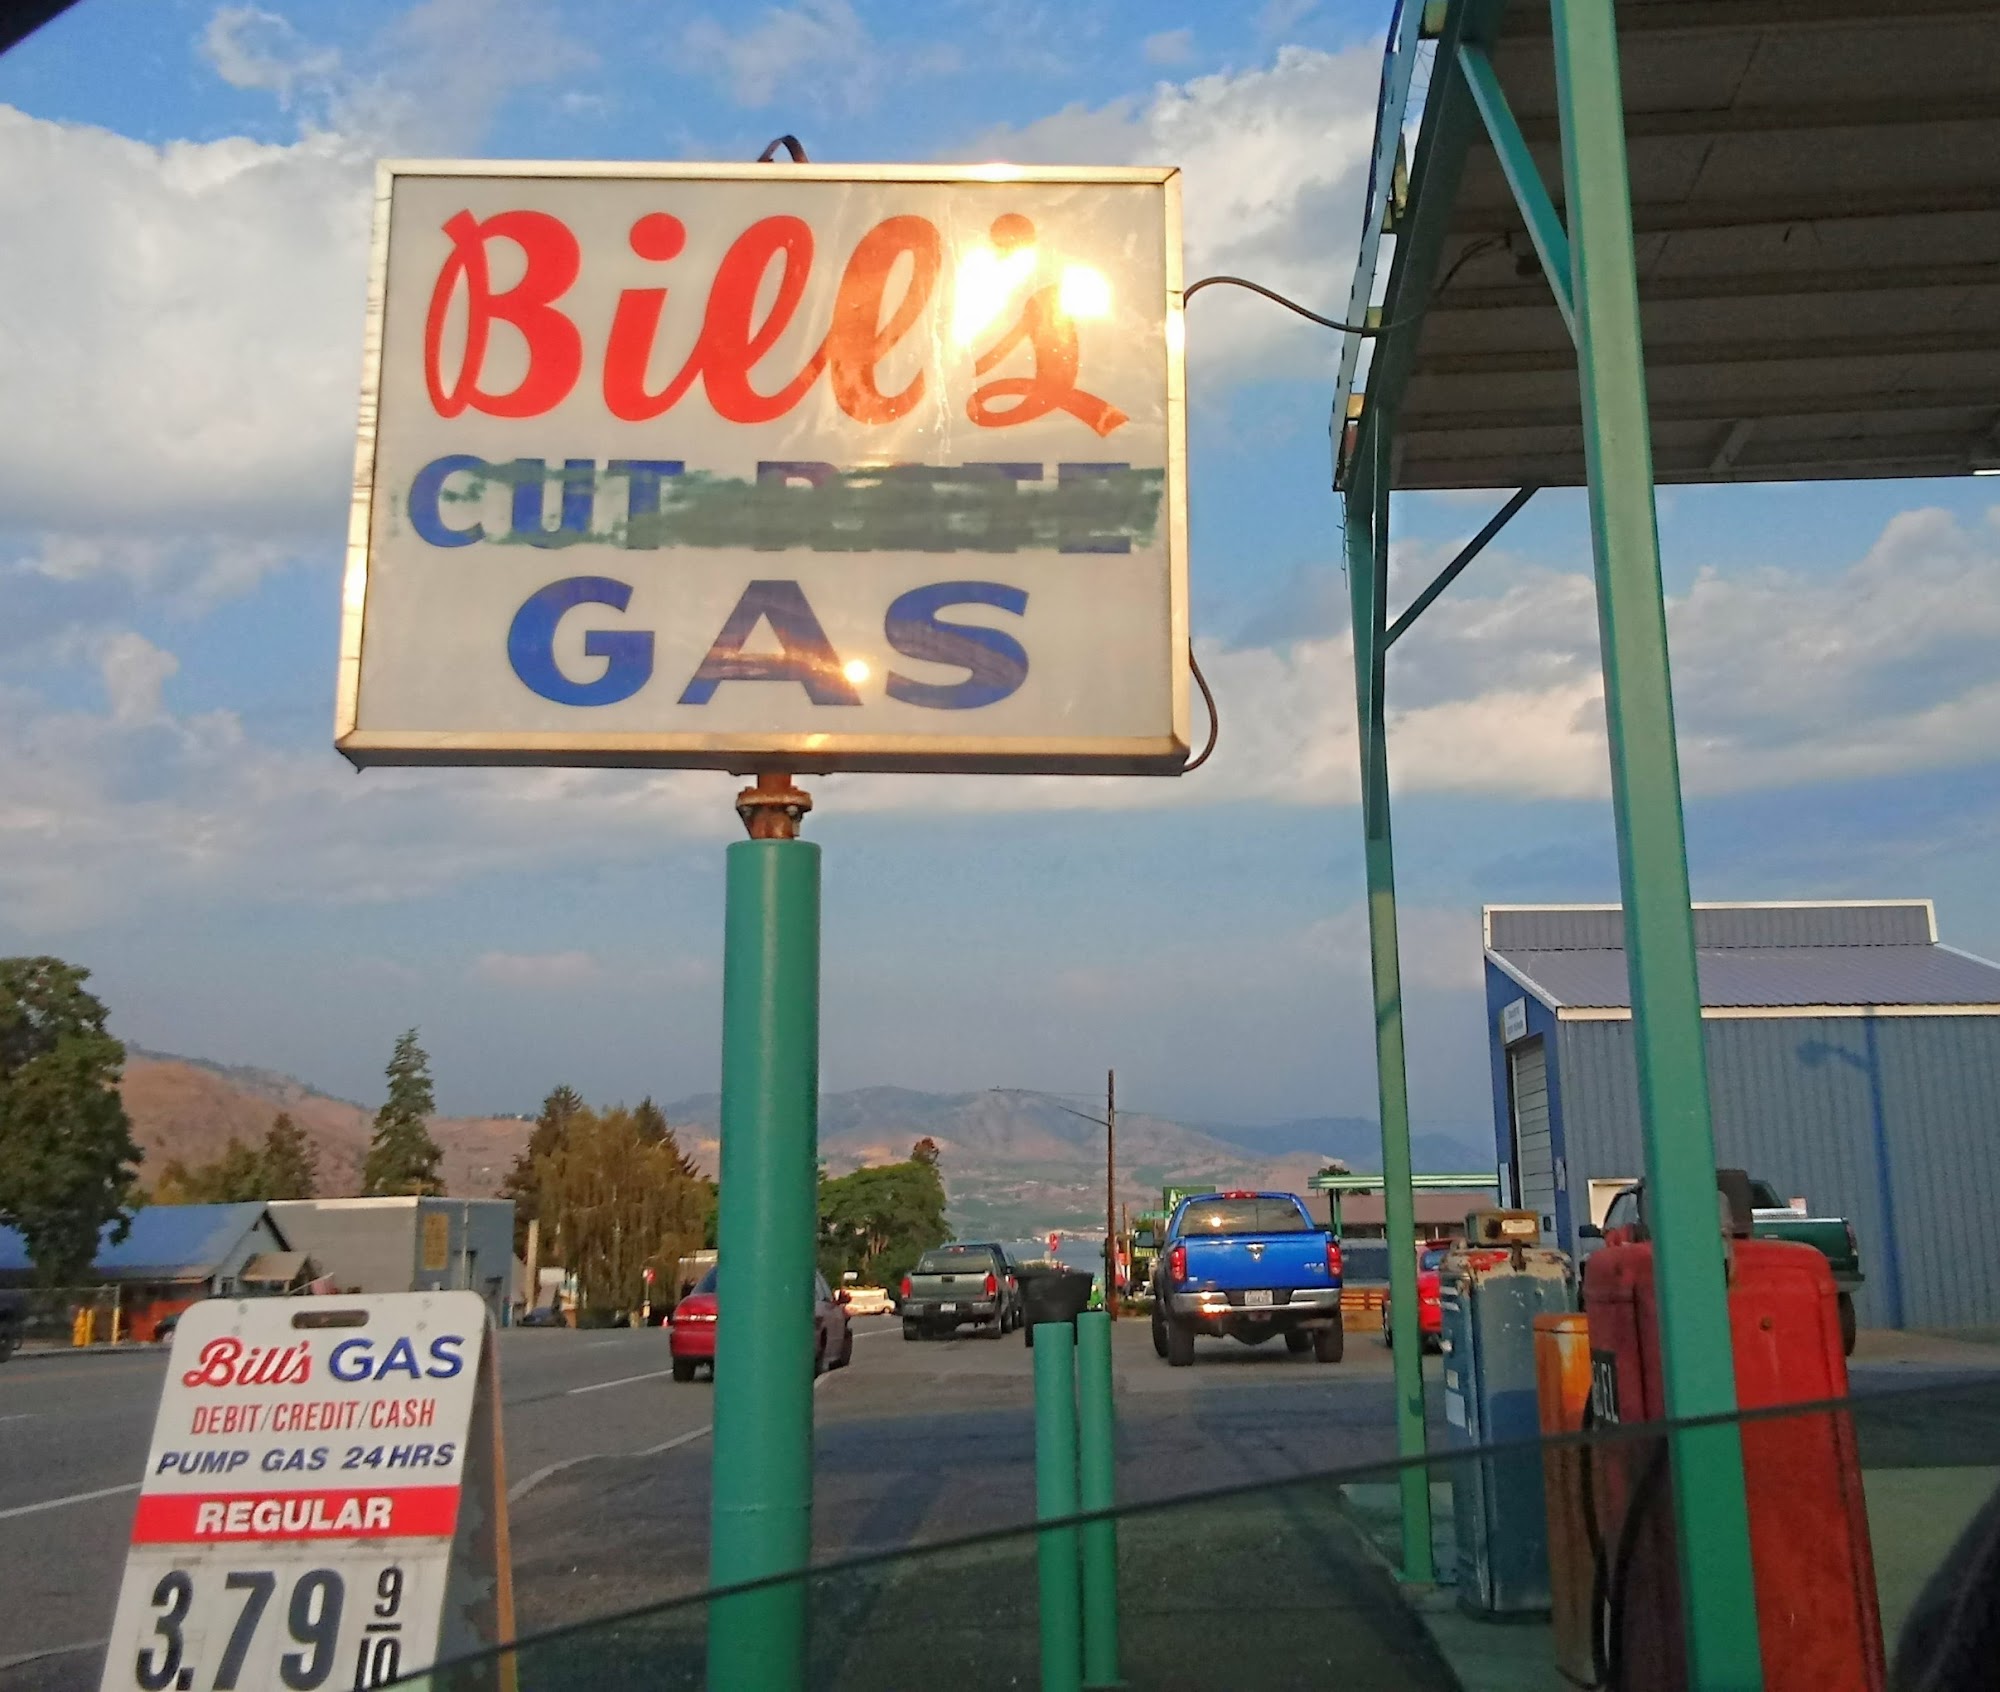 Bill's Gas